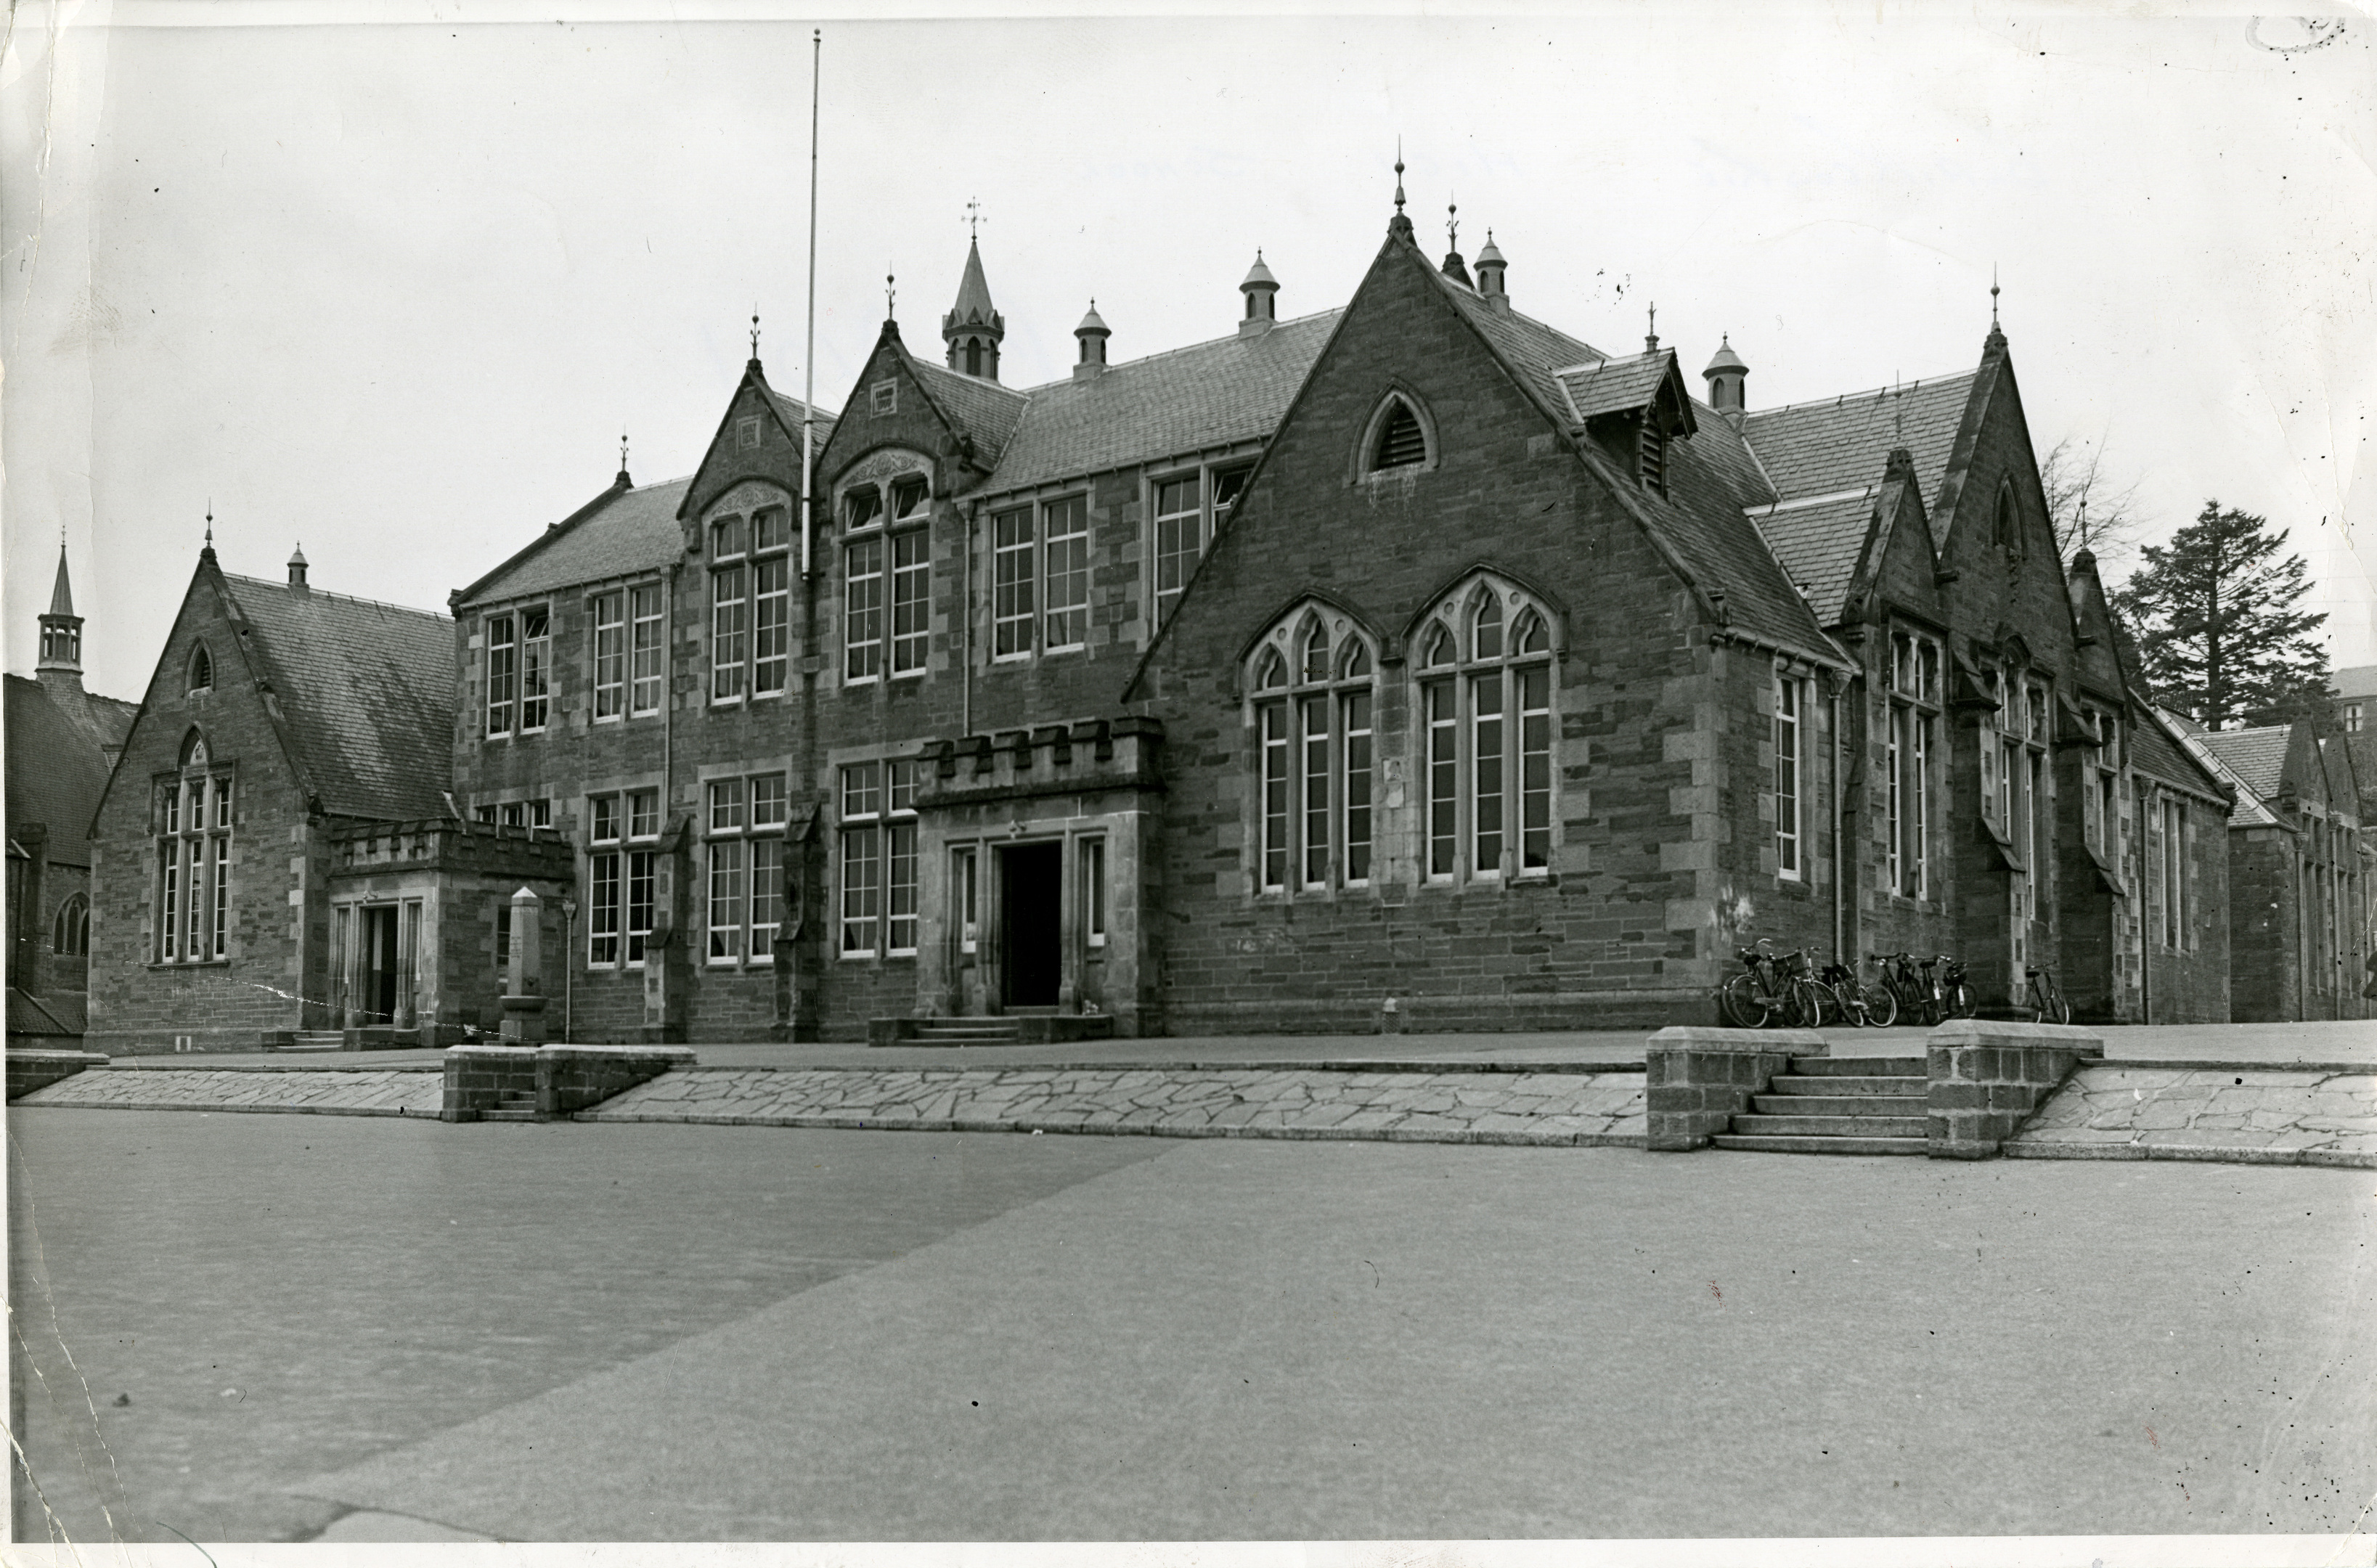 Blairgowrie High School. H236 1956-03-07 Blairgowrie (C)DCT